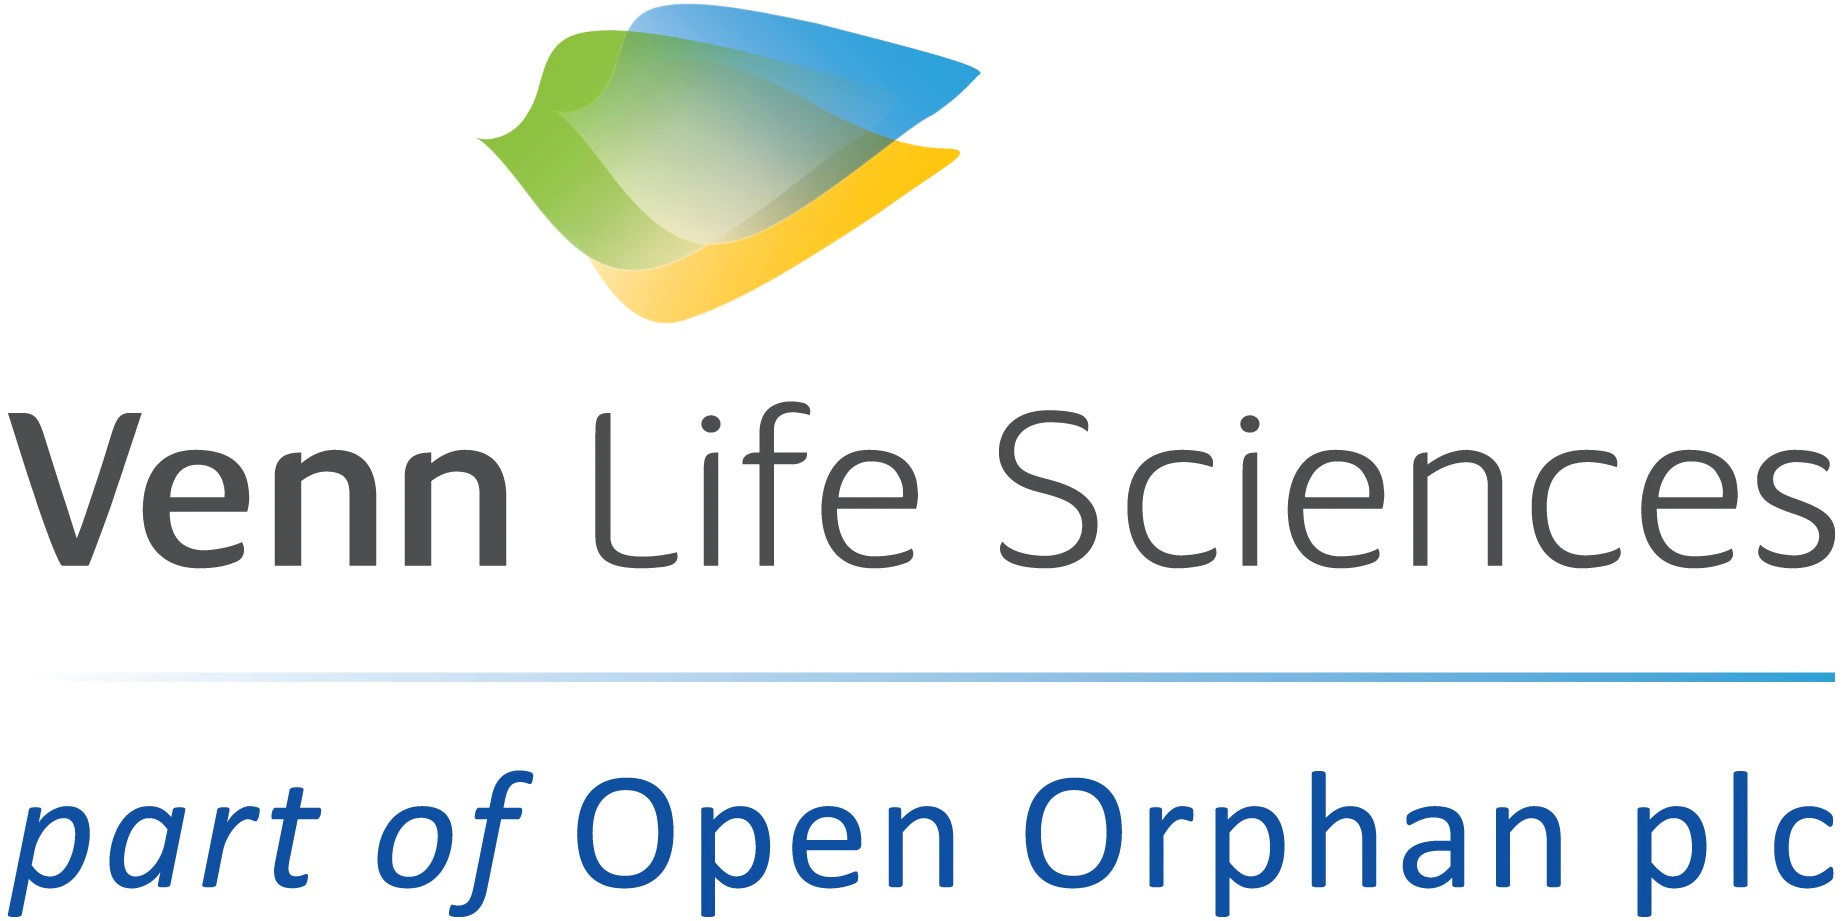 Venn Life Sciences logo